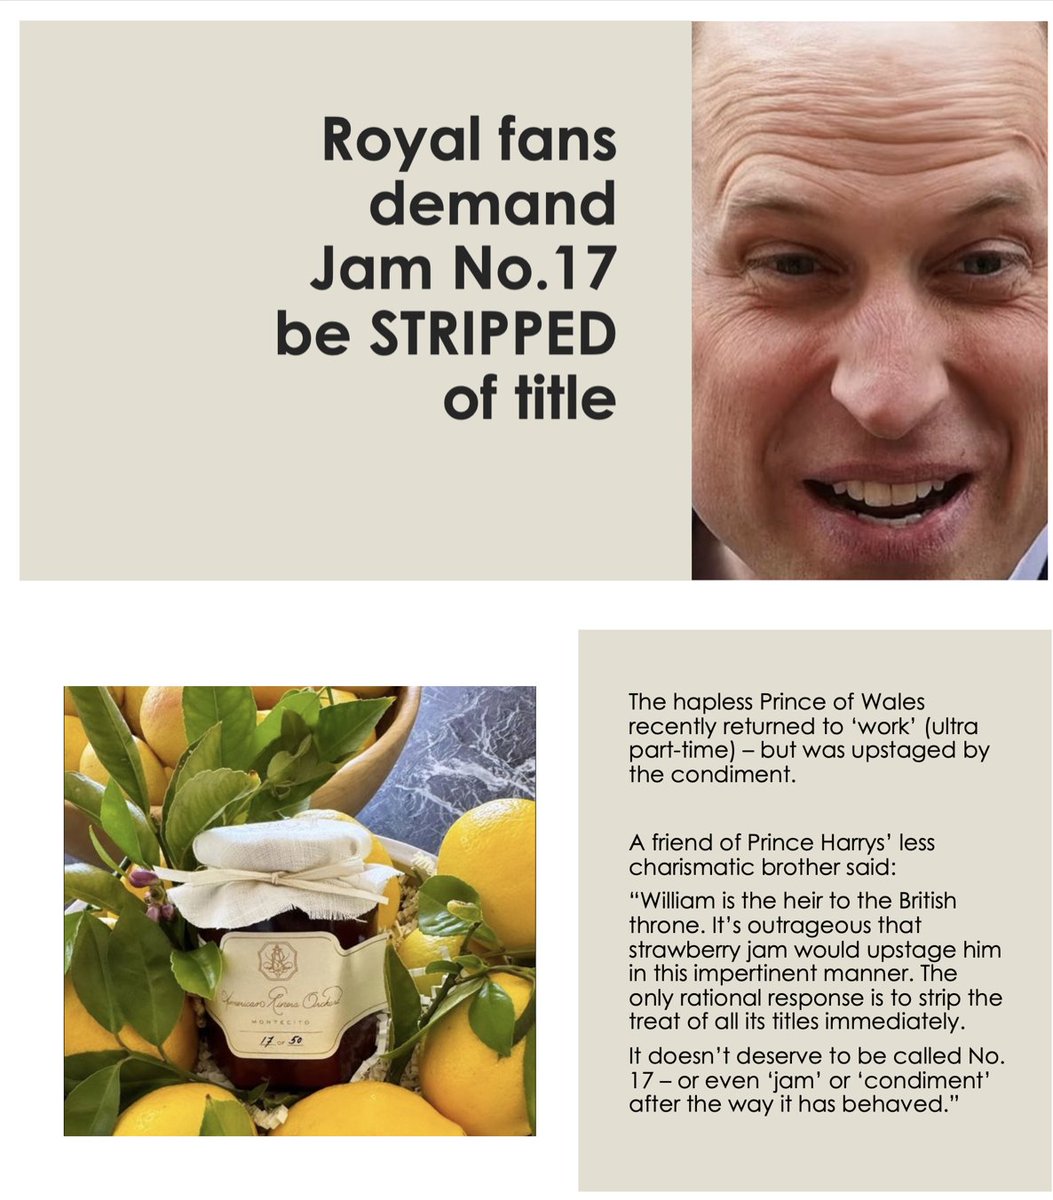 Enough is enough! Royal fans demand Jam No.17 be stripped of titles.

#PrinceWilliam #PrinceofWales #AmericanRiveriaOrchard #AmericanRivieraOrchard #DuchessMeghan #MeghanMarkIe